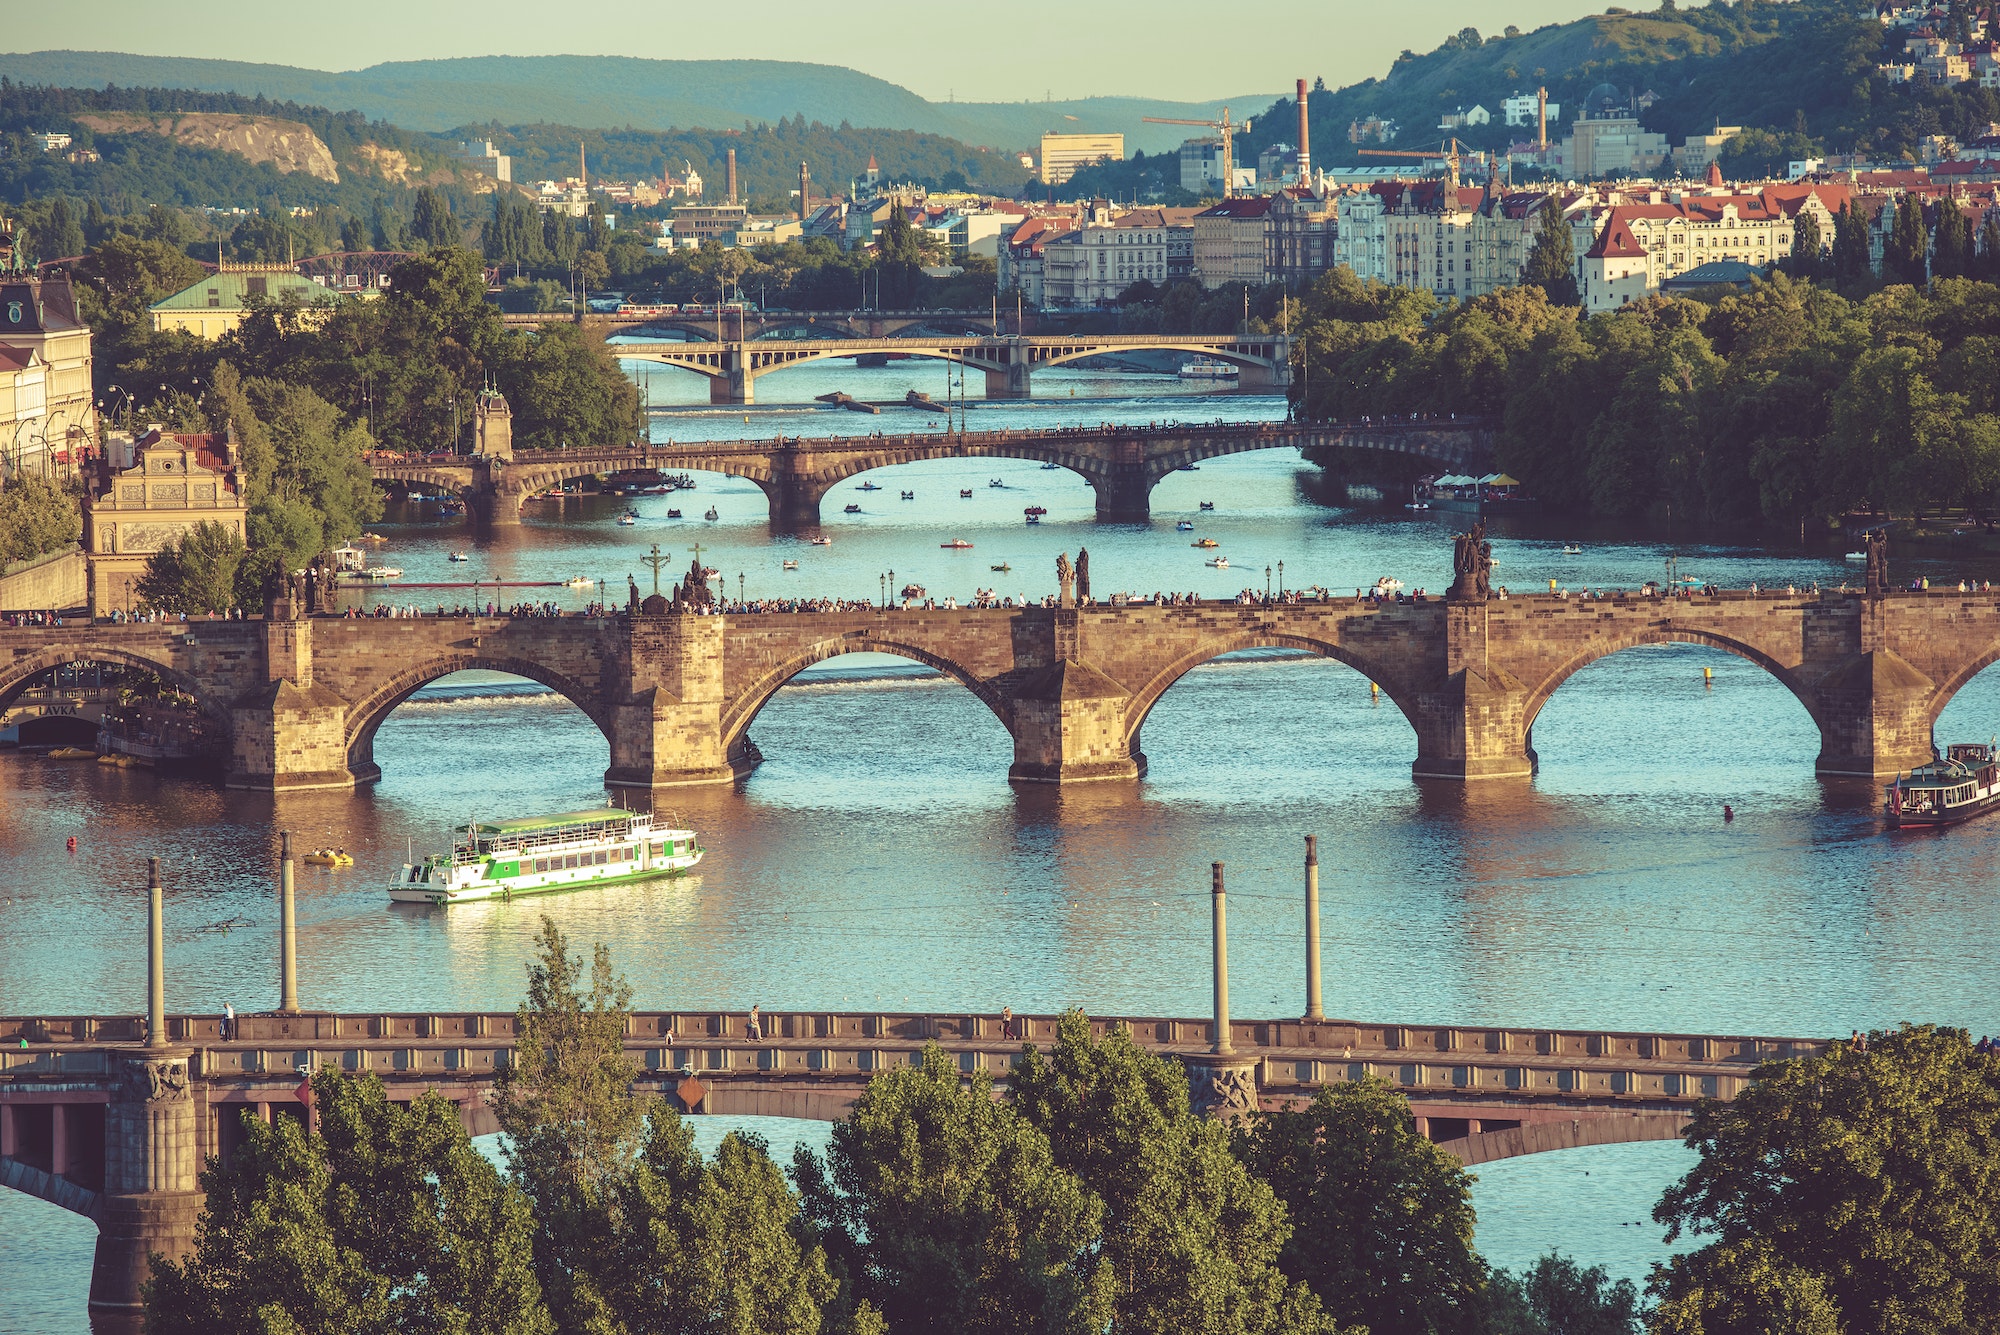 The Prague Bridges